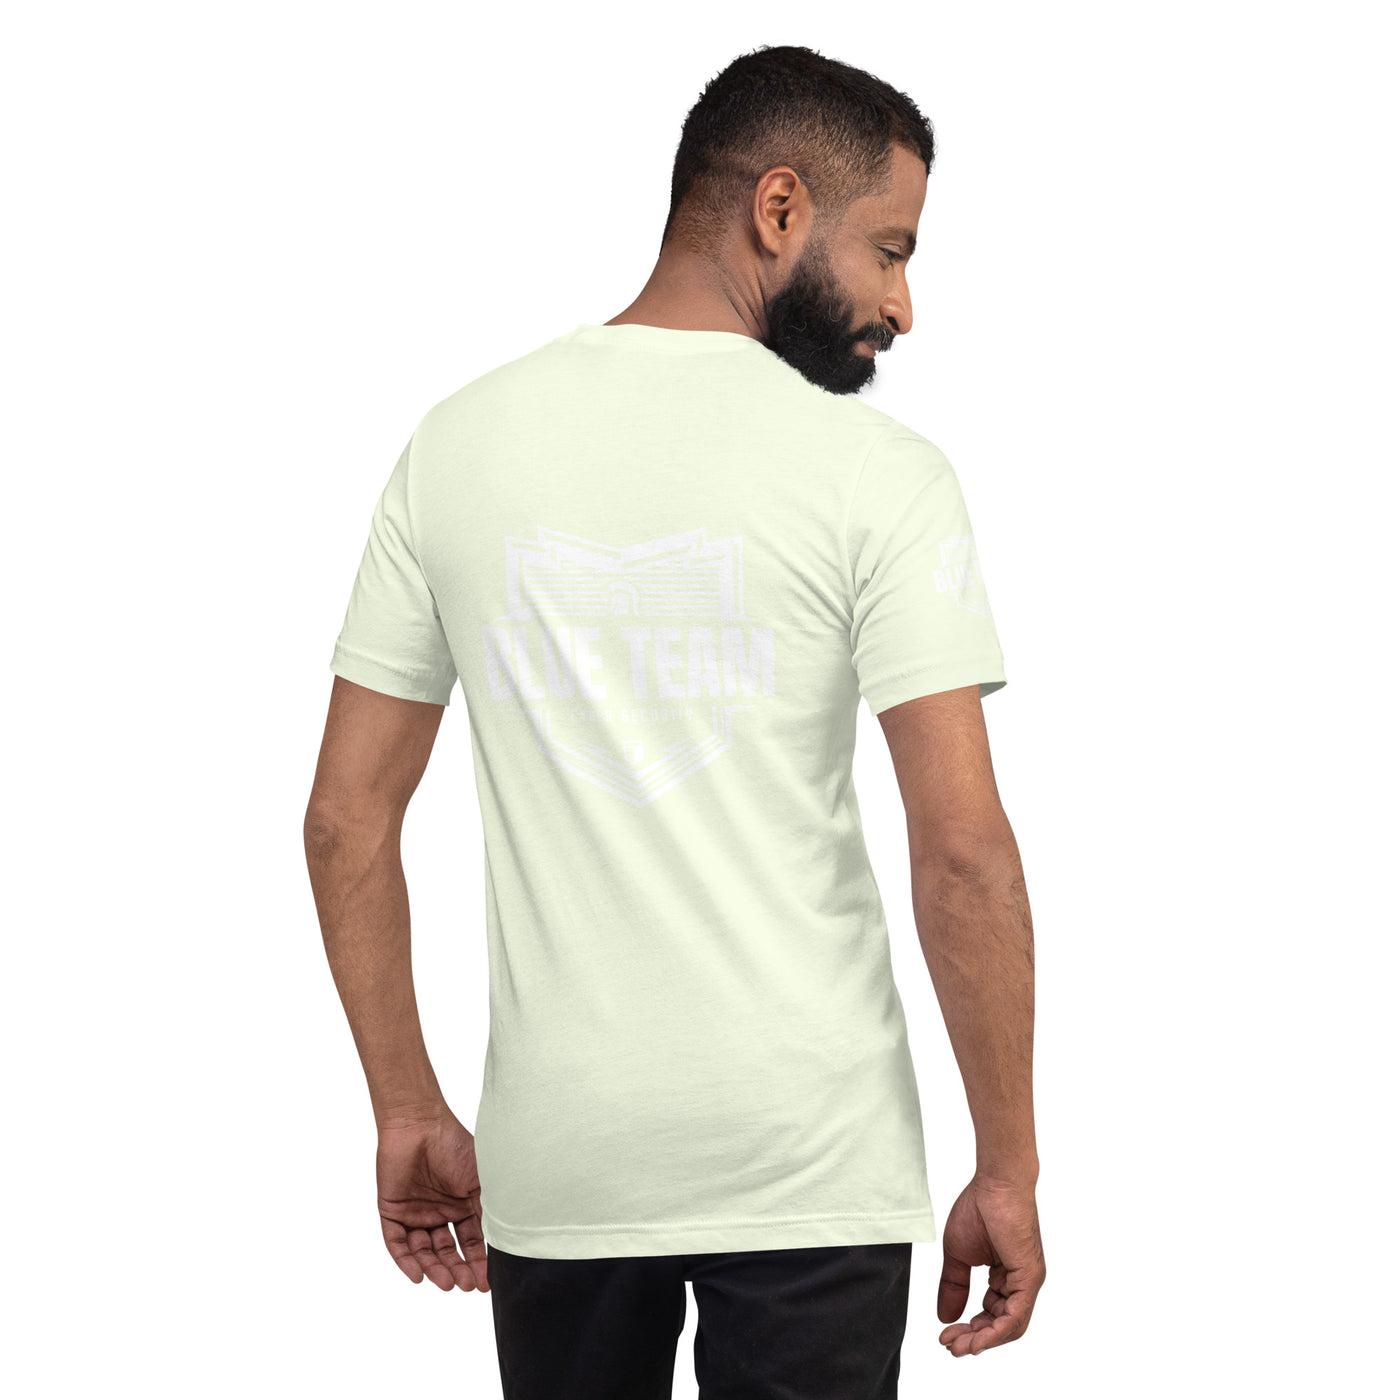 Cyber Security Blue Team V1 - Unisex t-shirt ( Back Print )